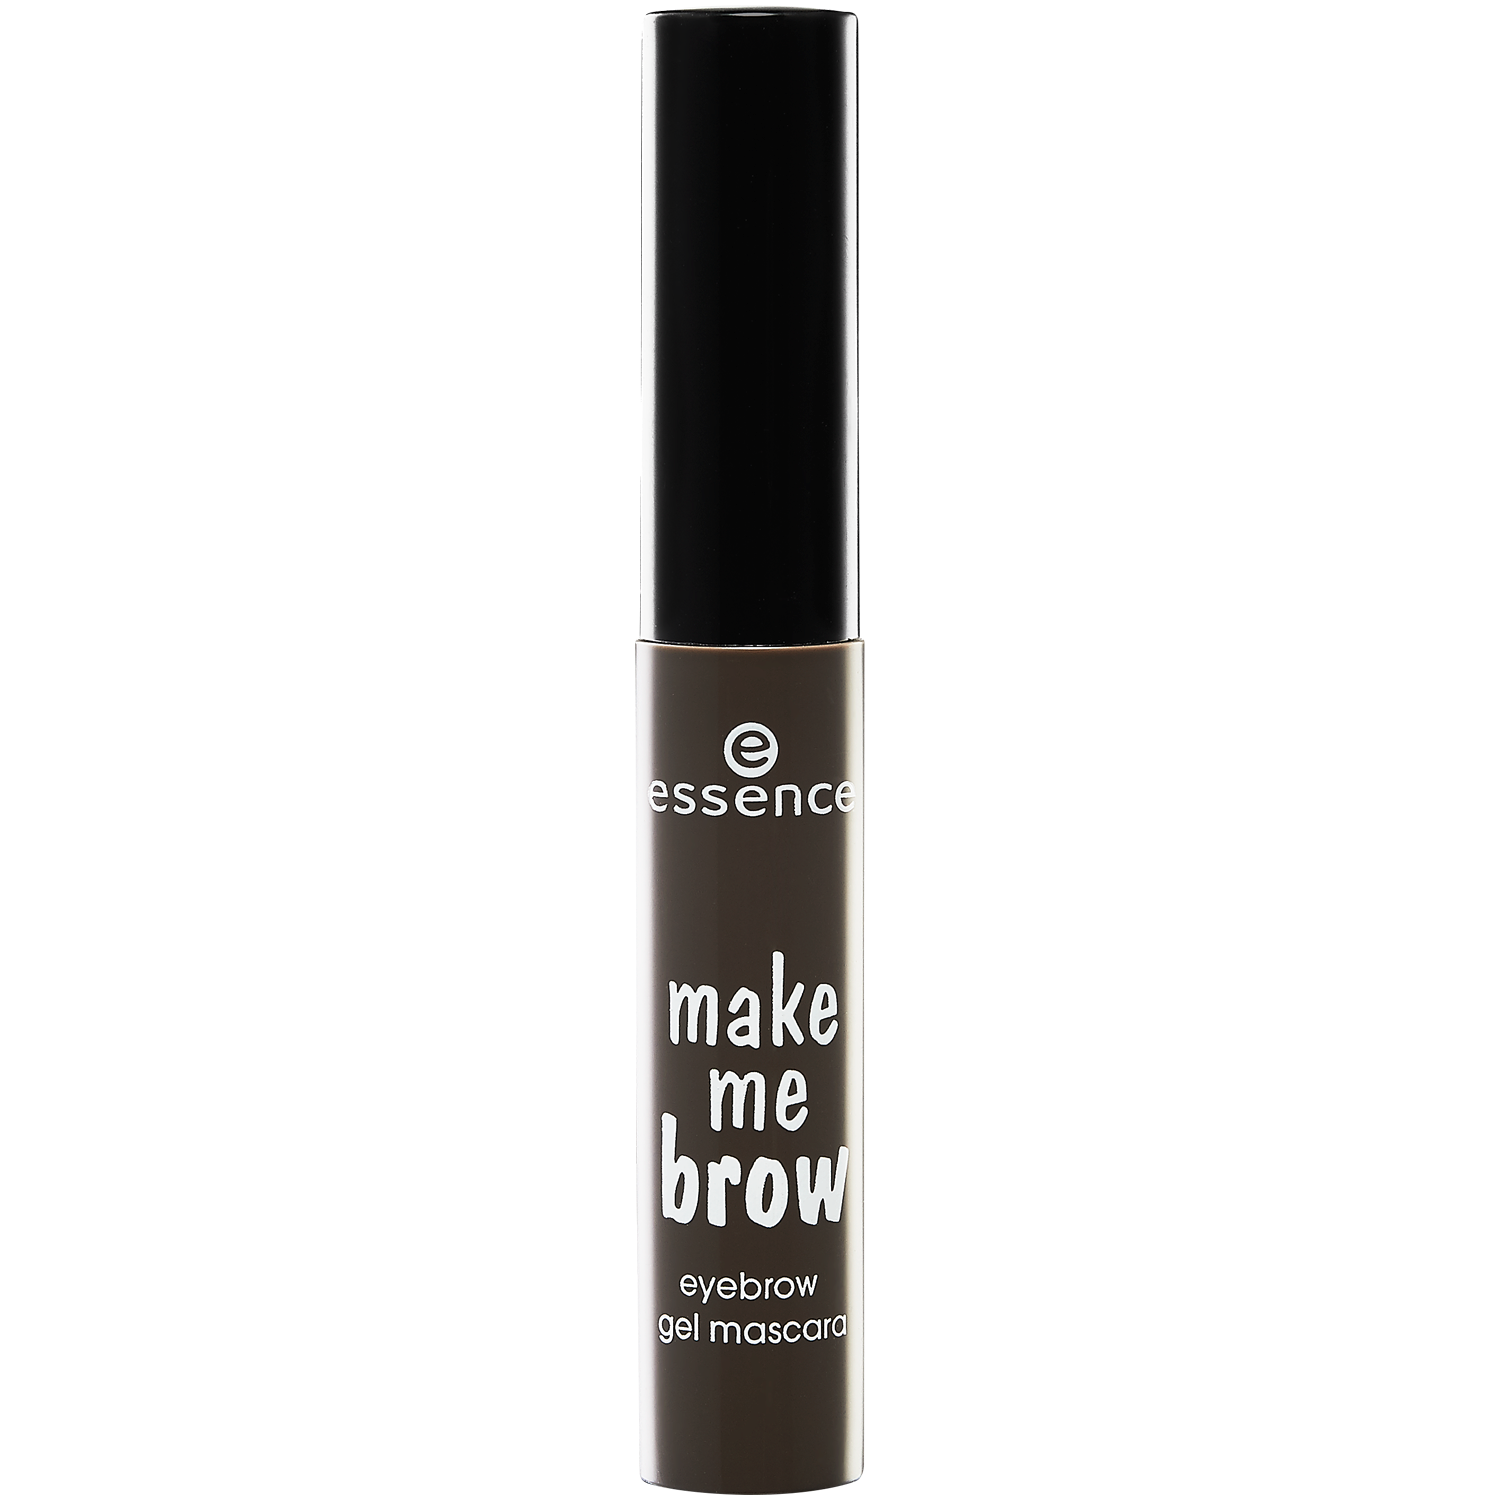 Гель для укладки бровей 02 Essence Make Me Brow, 3,8 гр essence make me brow eyebrow gel mascara 01 blondy brows 3 8мл